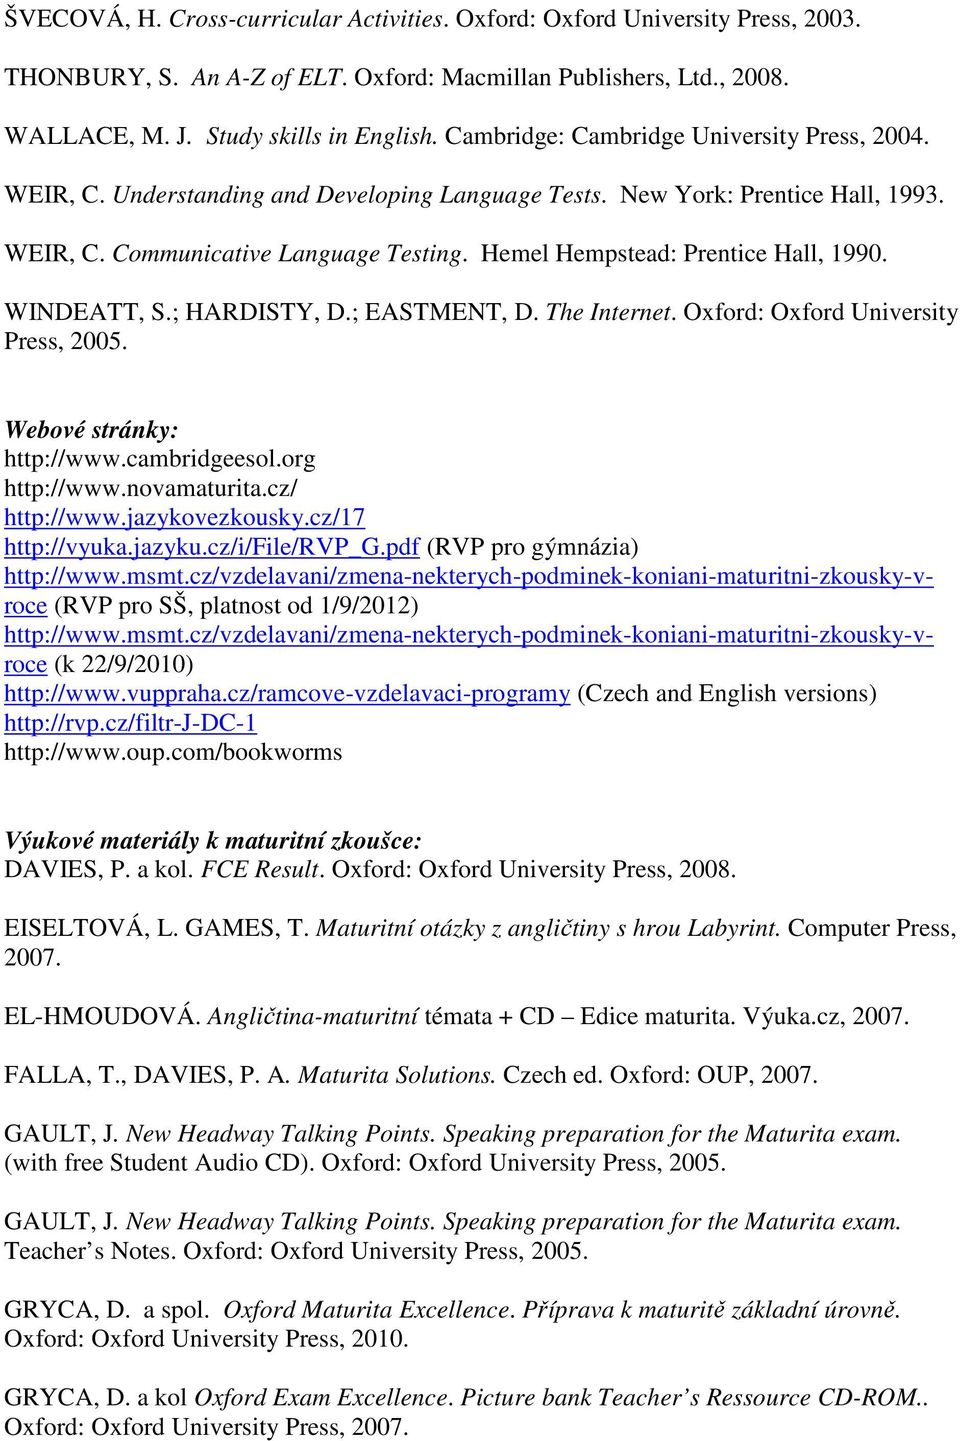 Hemel Hempstead: Prentice Hall, 1990. WINDEATT, S.; HARDISTY, D.; EASTMENT, D. The Internet. Oxford: Oxford University Press, 2005. Webové stránky: http://www.cambridgeesol.org http://www.